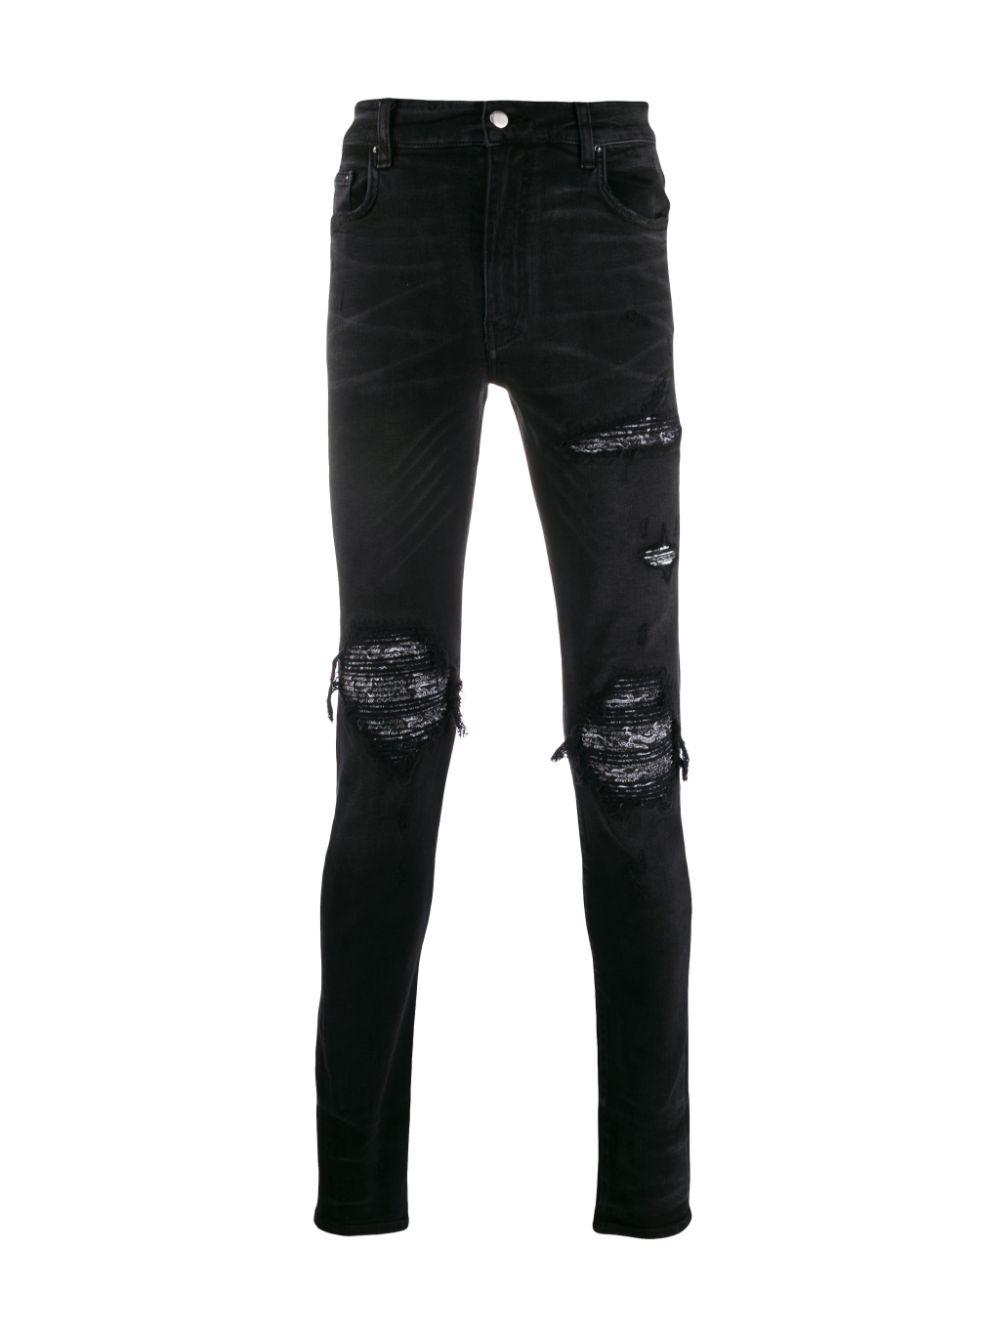 Amiri Denim Mx1 Bandana Jeans in Black for Men - Lyst